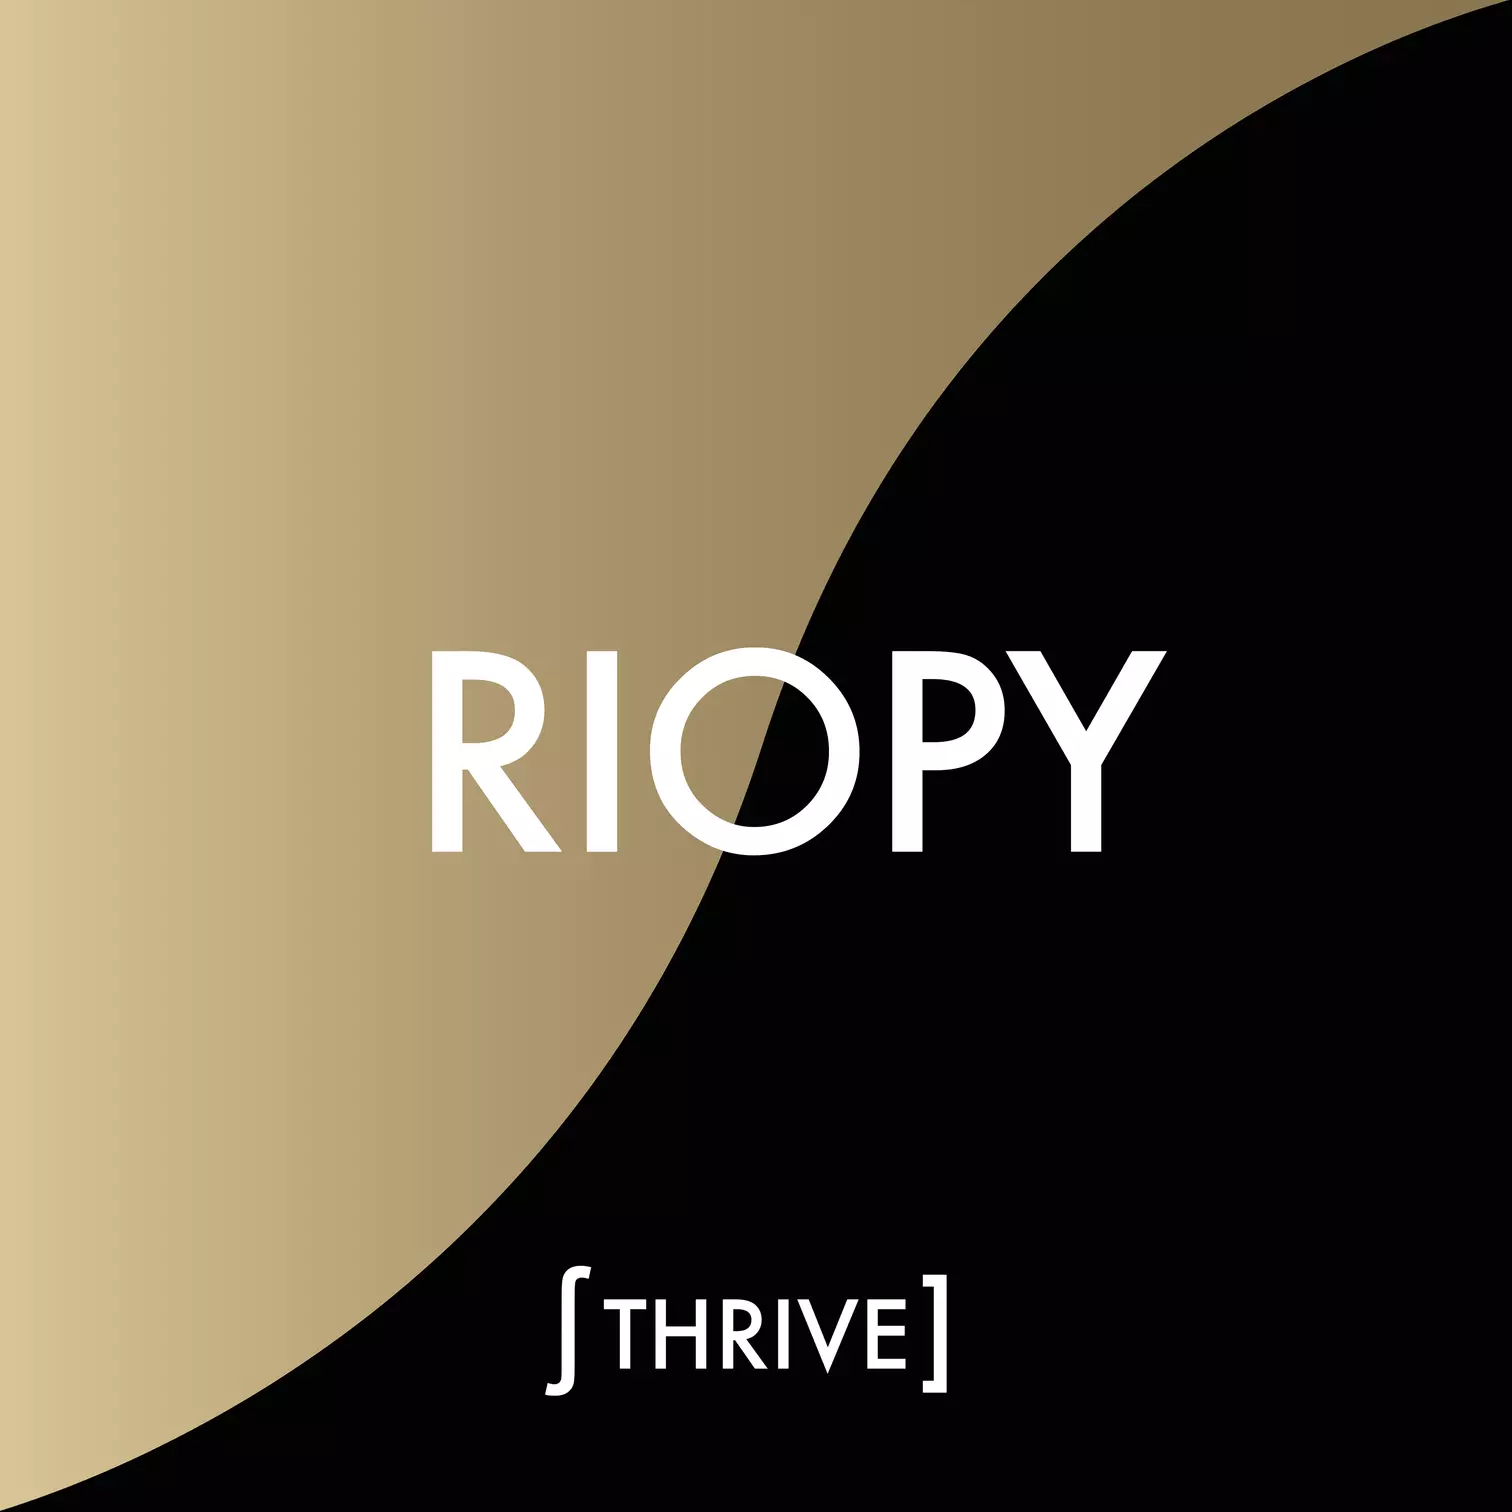 RIOPY Thrive